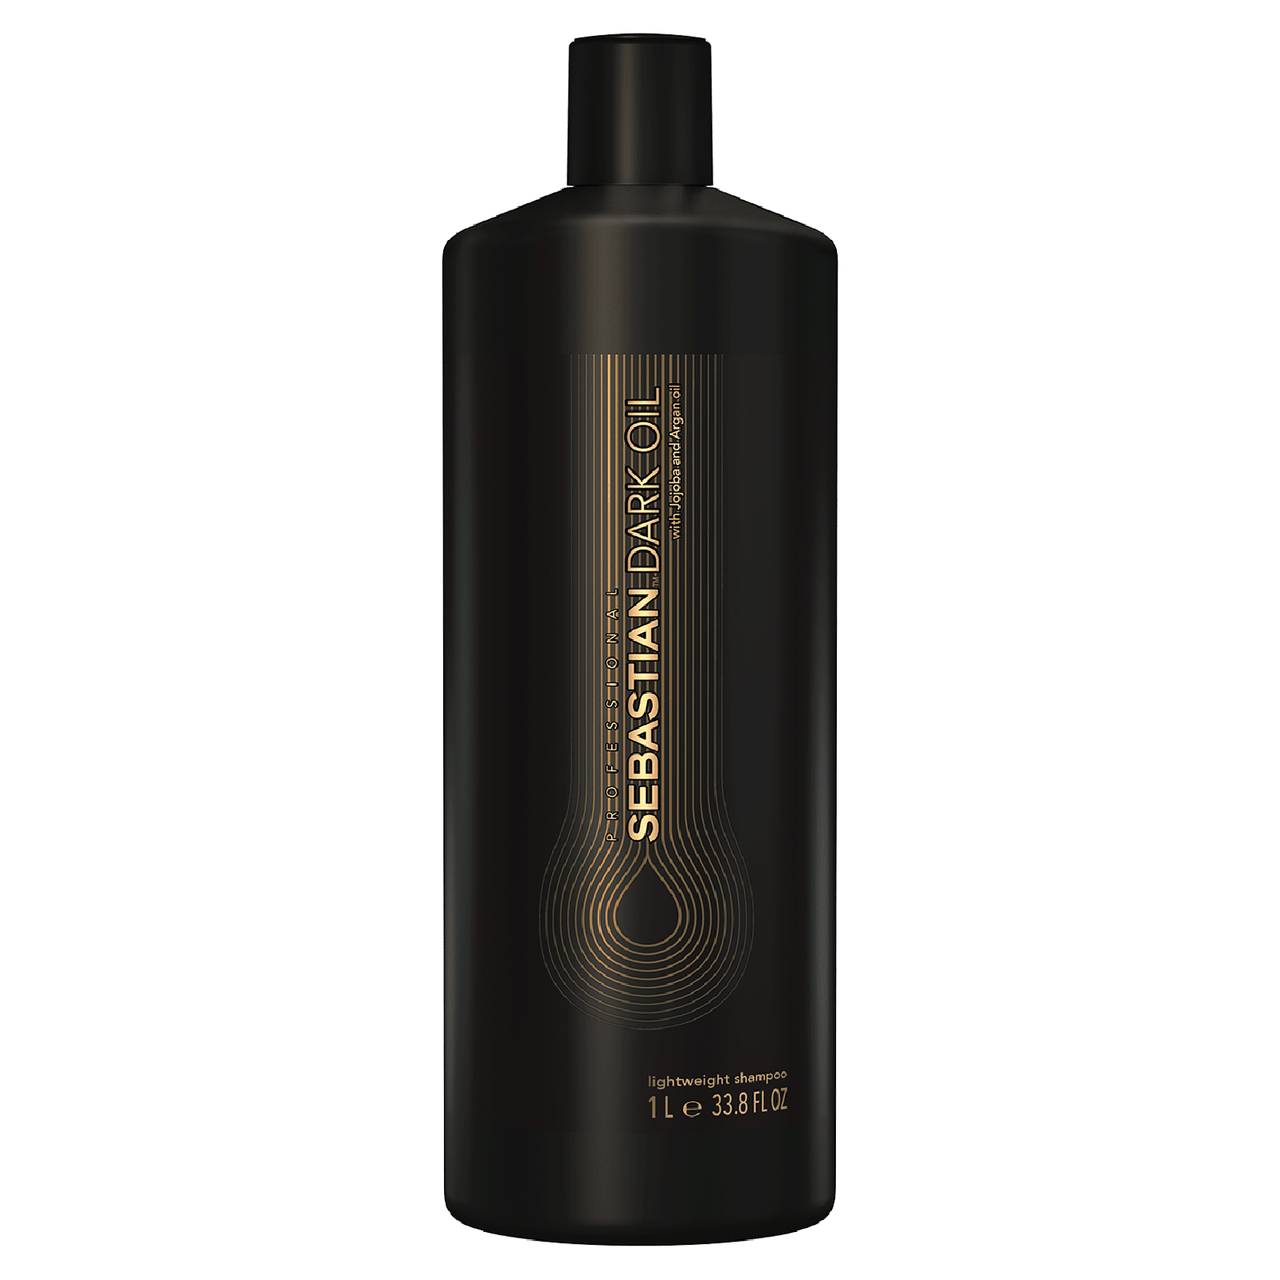 Sebastian Dark Oil Lightweight Shampoo 33.8 fl oz